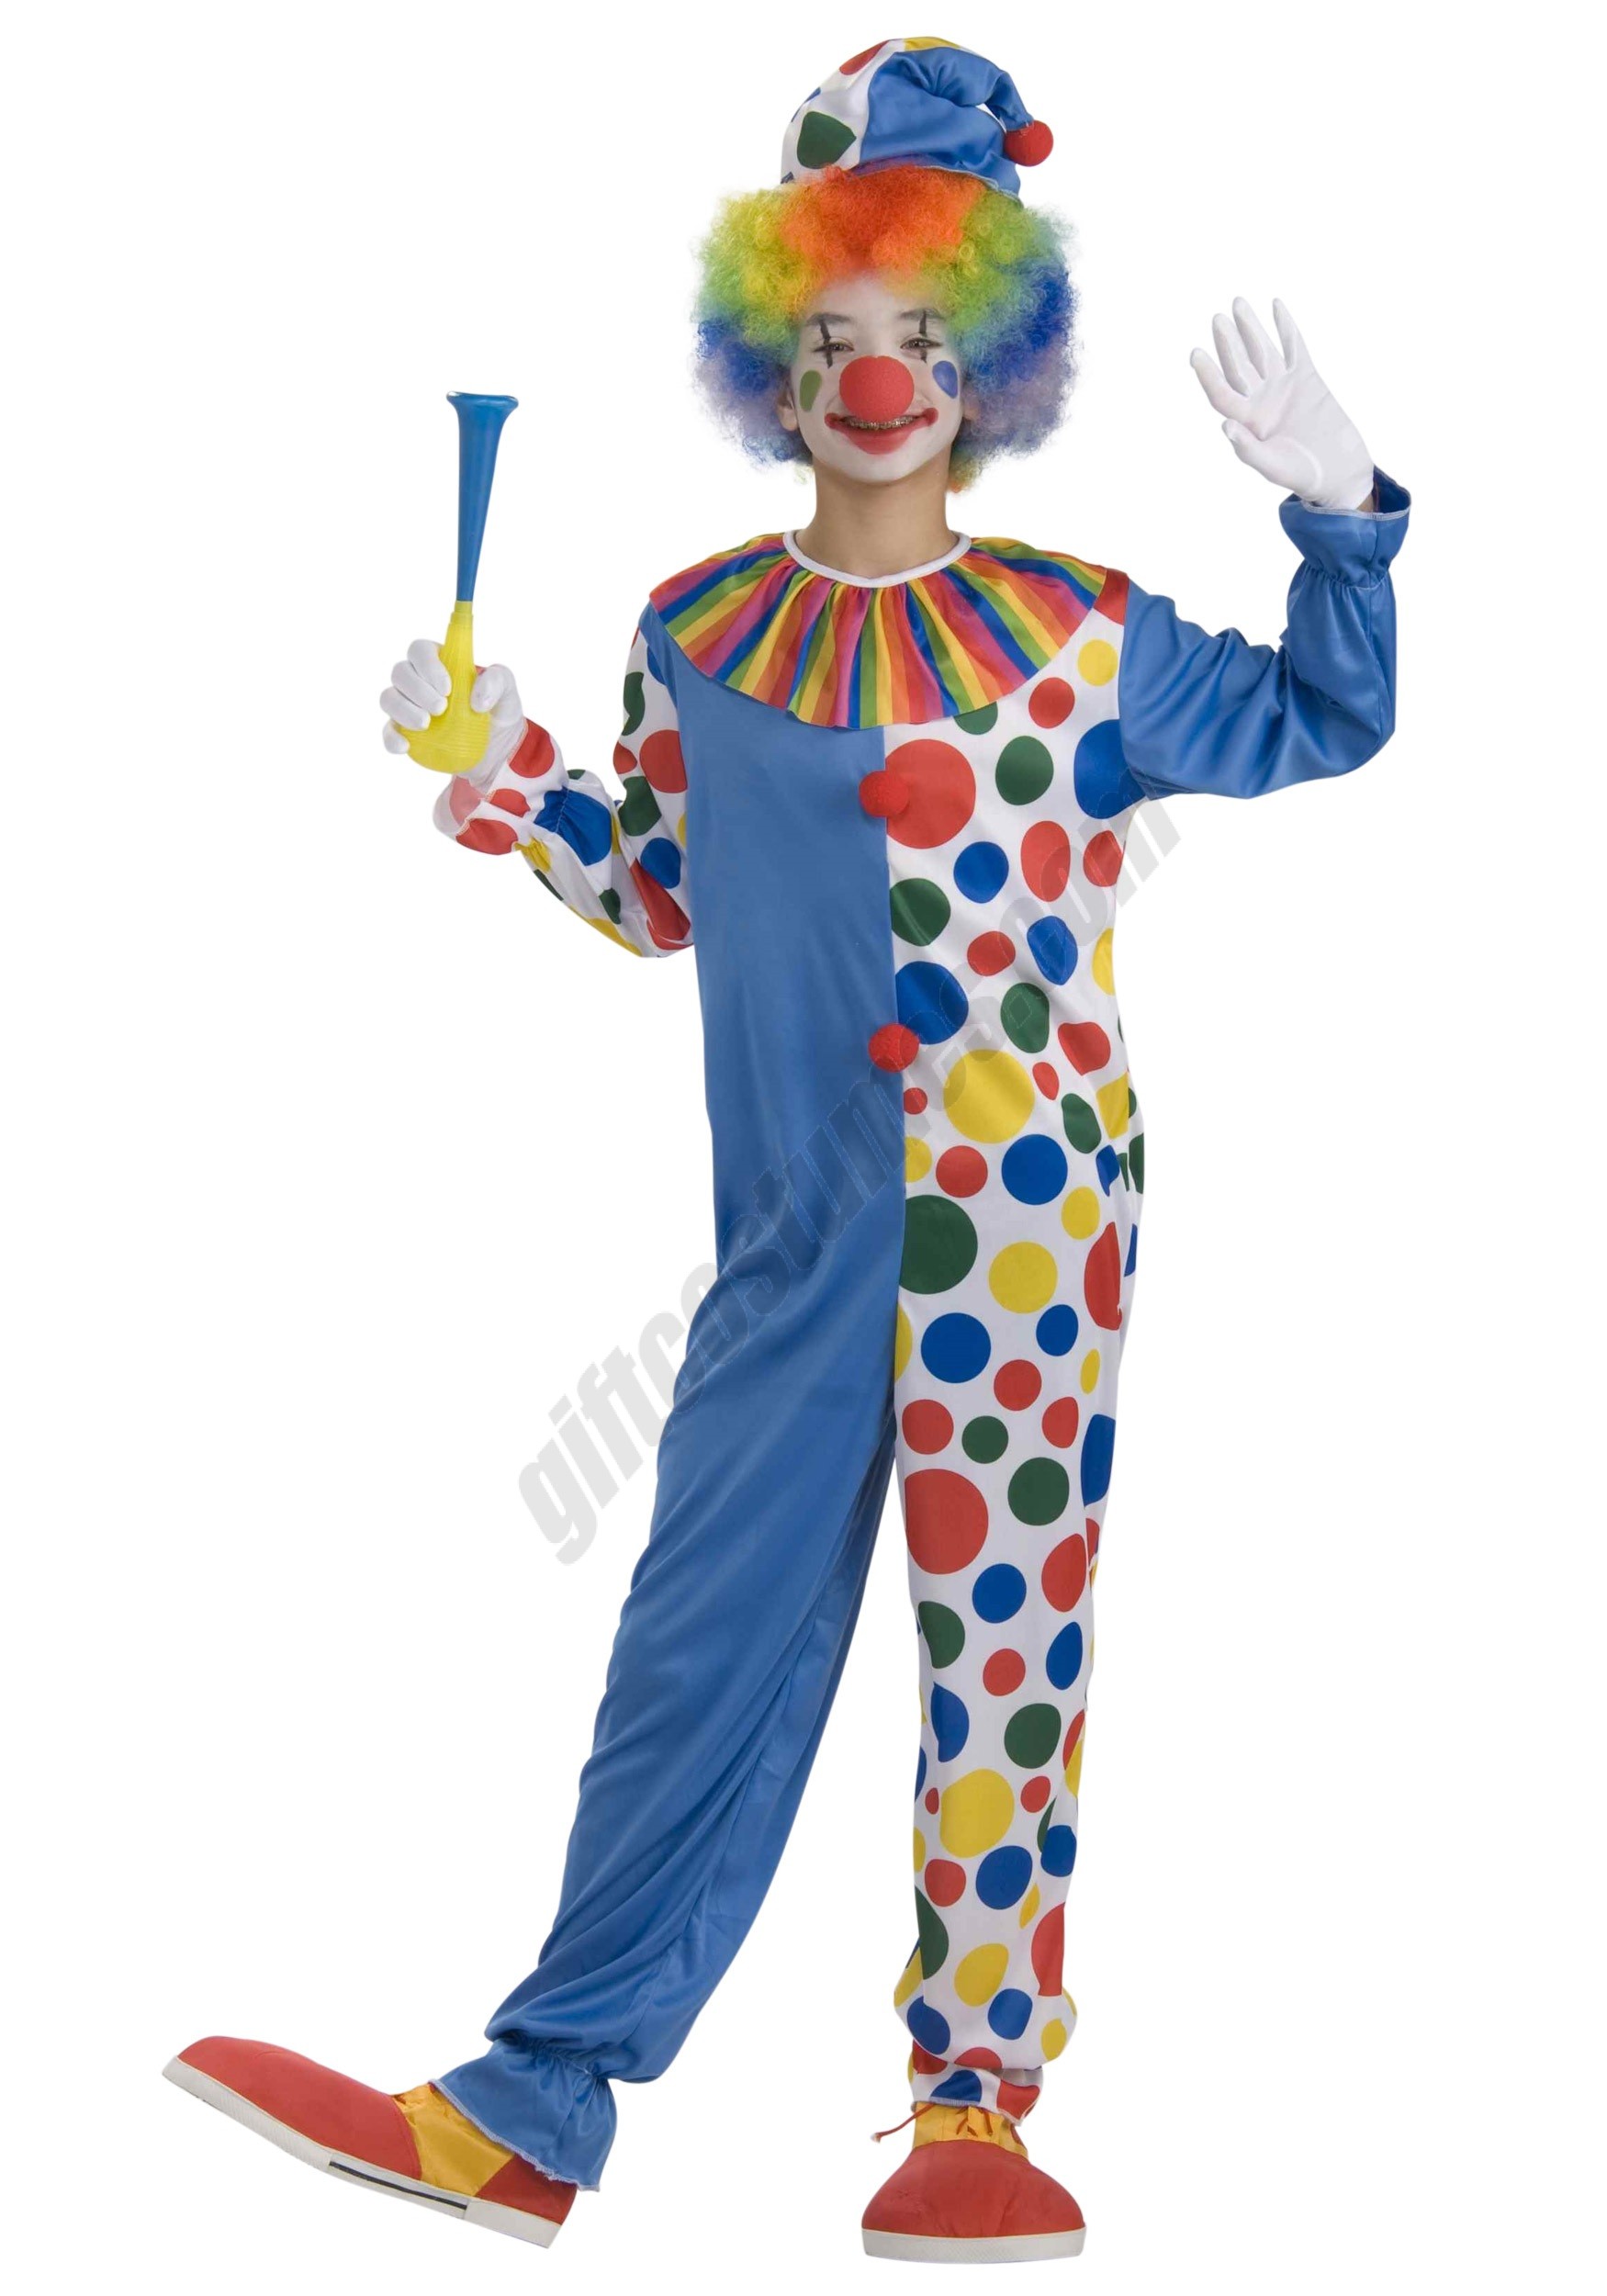 Teen Big Top Clown Costume Promotions - Teen Big Top Clown Costume Promotions